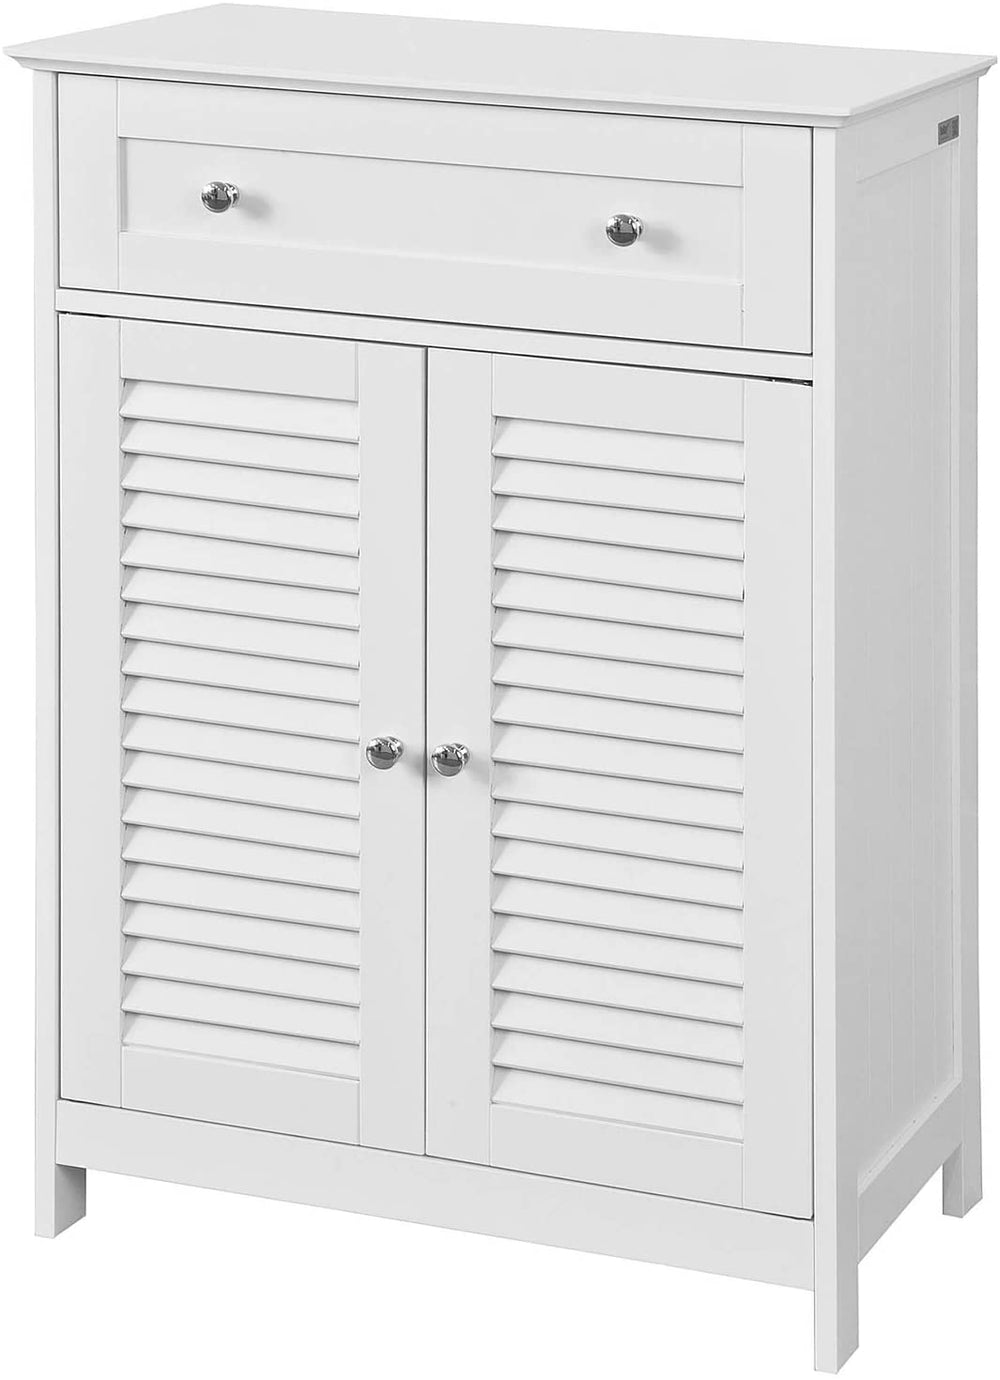 Freestanding Bathroom Storage Cabinet with Doors/Drawer 60x87x35 cm Homecoze